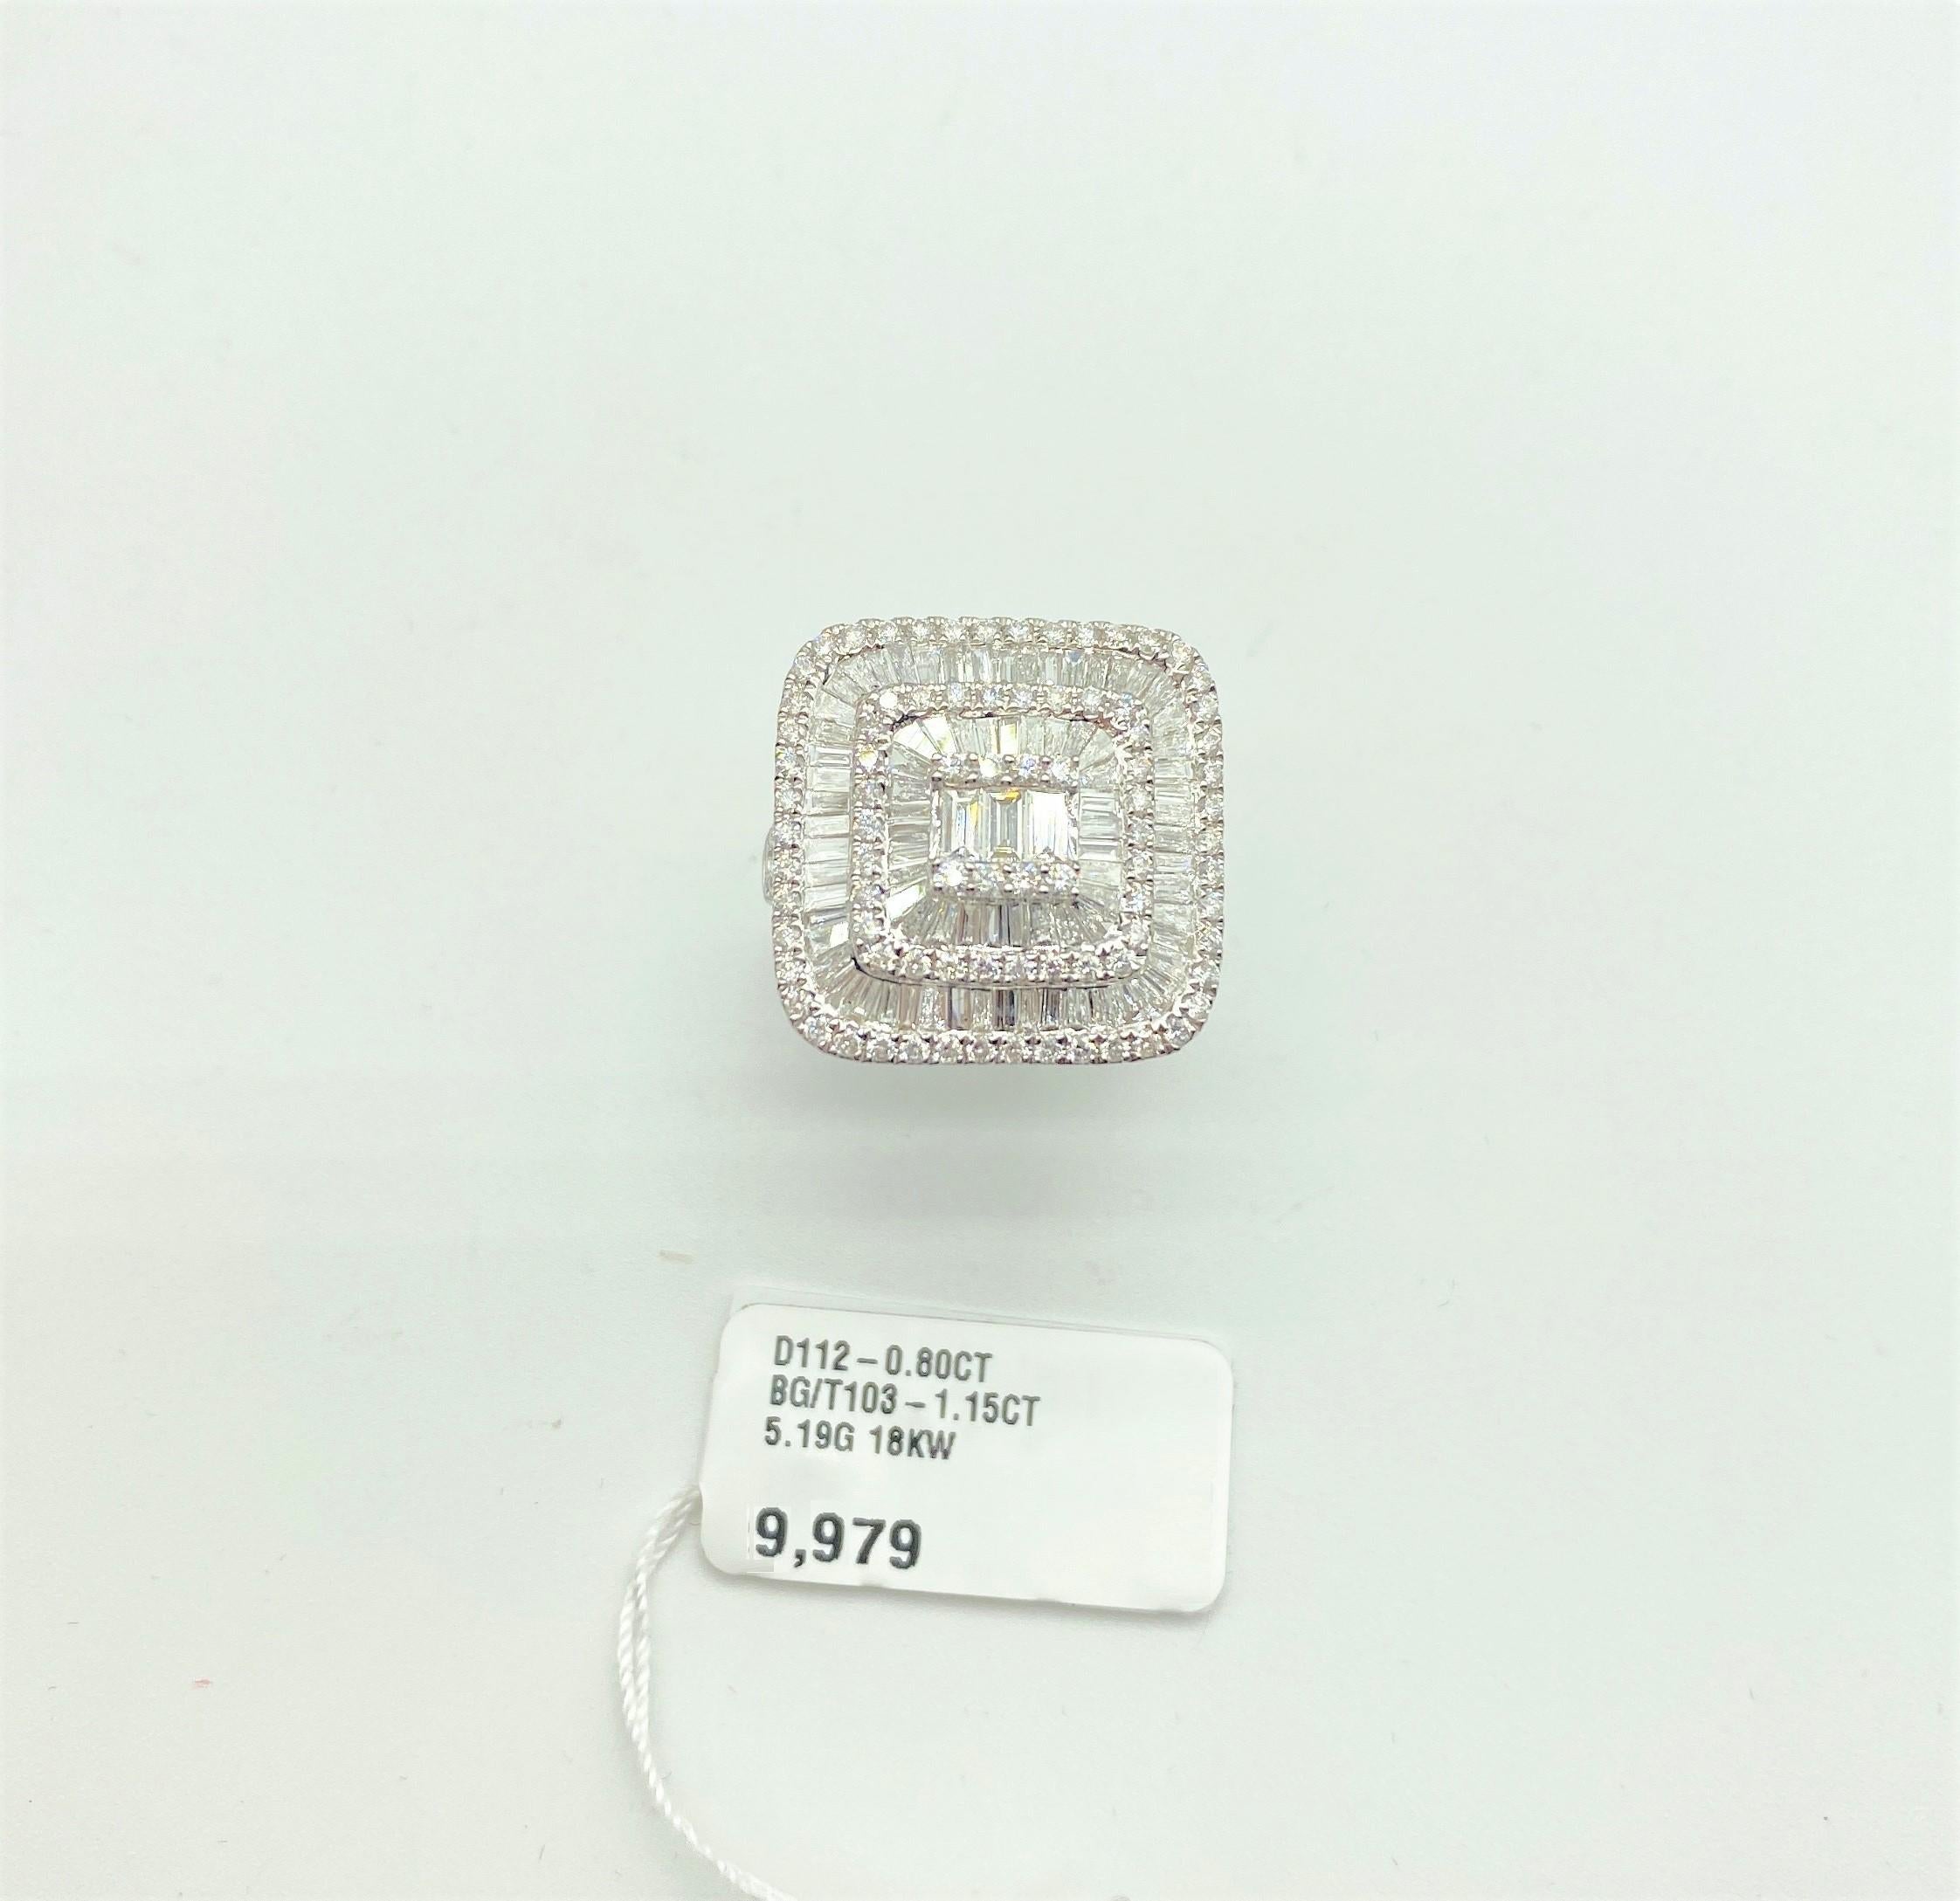 $9 000 engagement ring